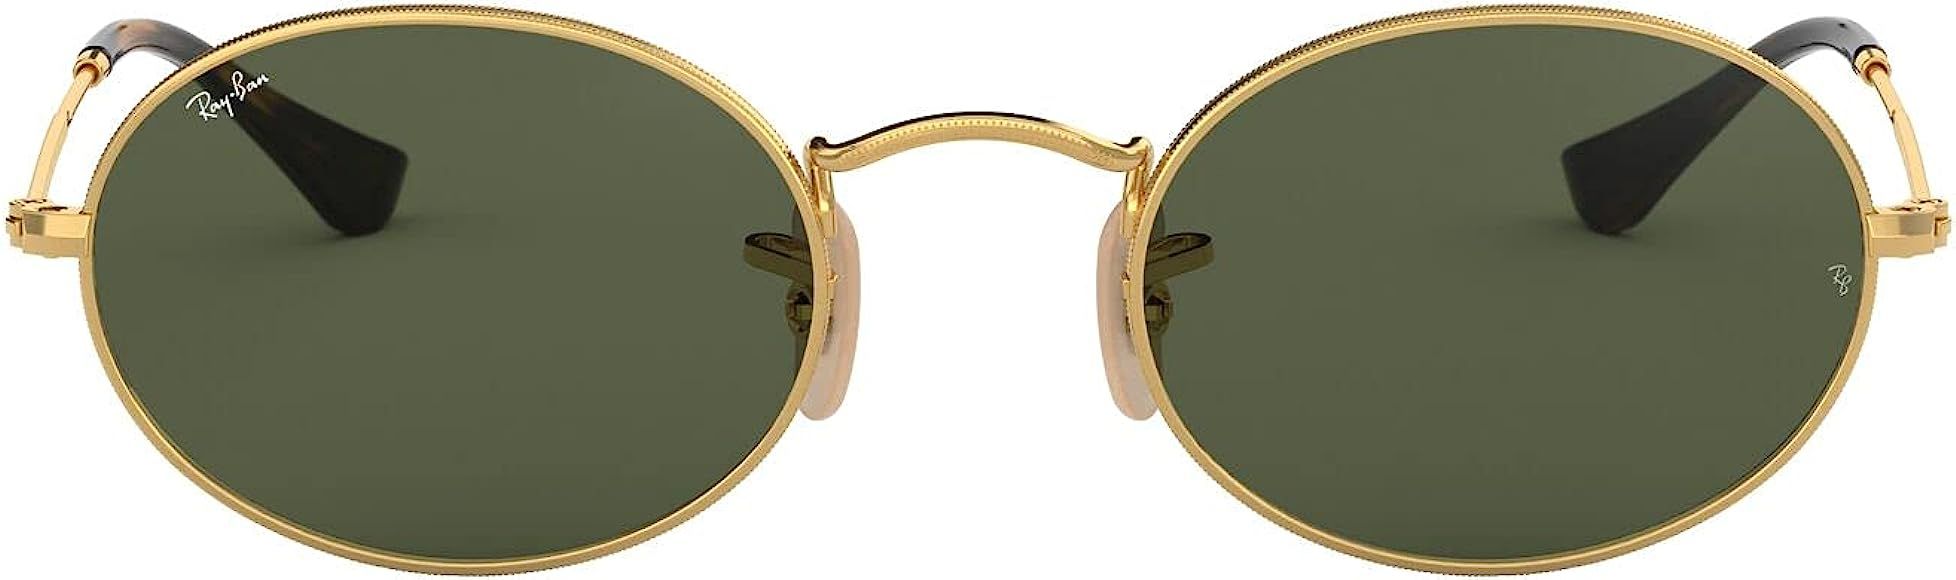 Ray-Ban unisex-adult 0RB3547N Rb3547n Oval Flat Lenses Sunglasses | Amazon (UK)